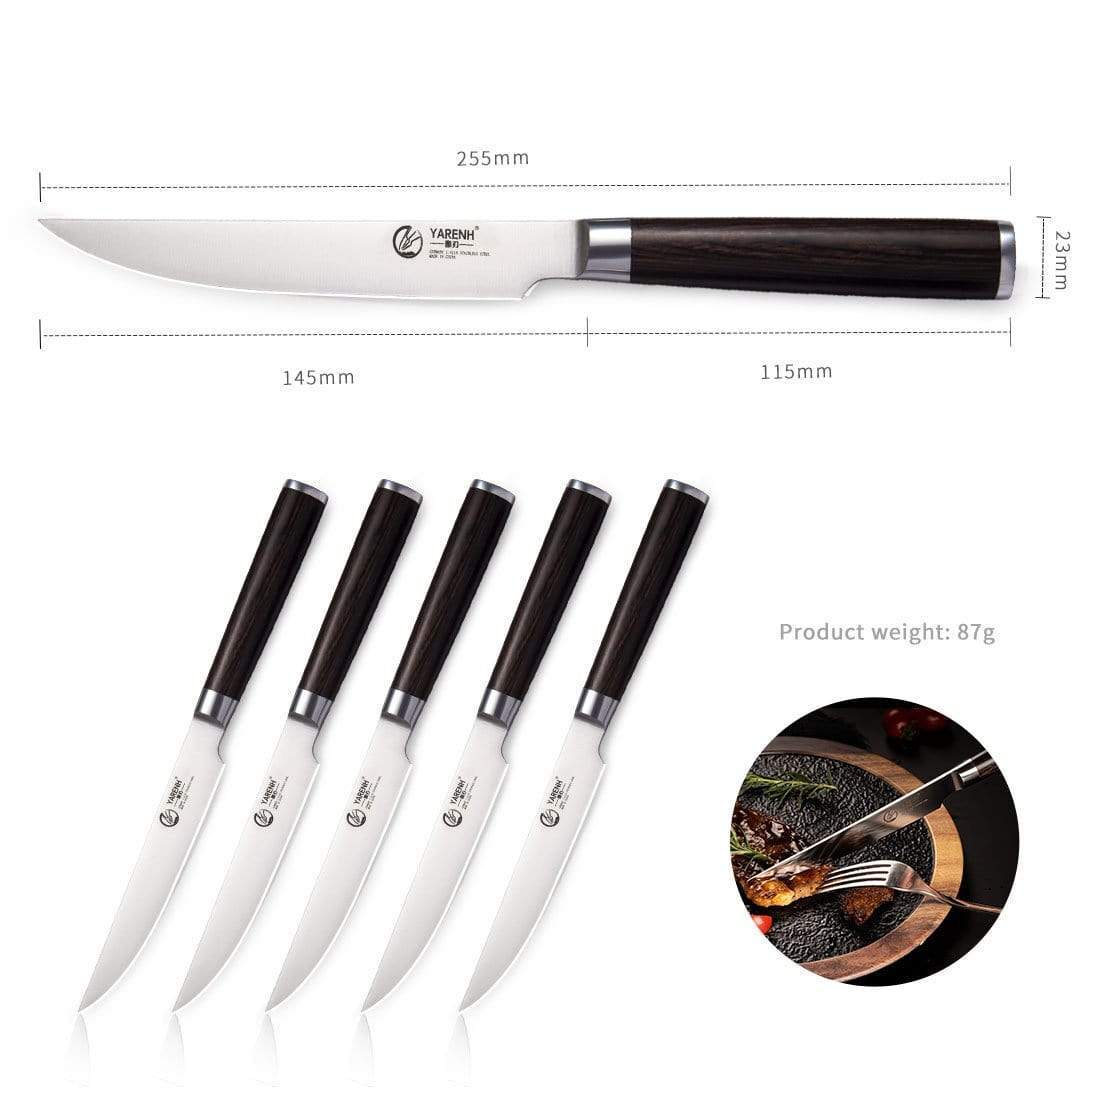  TAKIMASHII 6 1/2 Grape Hook Knife Serrated Stainless Steel  Blade : Patio, Lawn & Garden